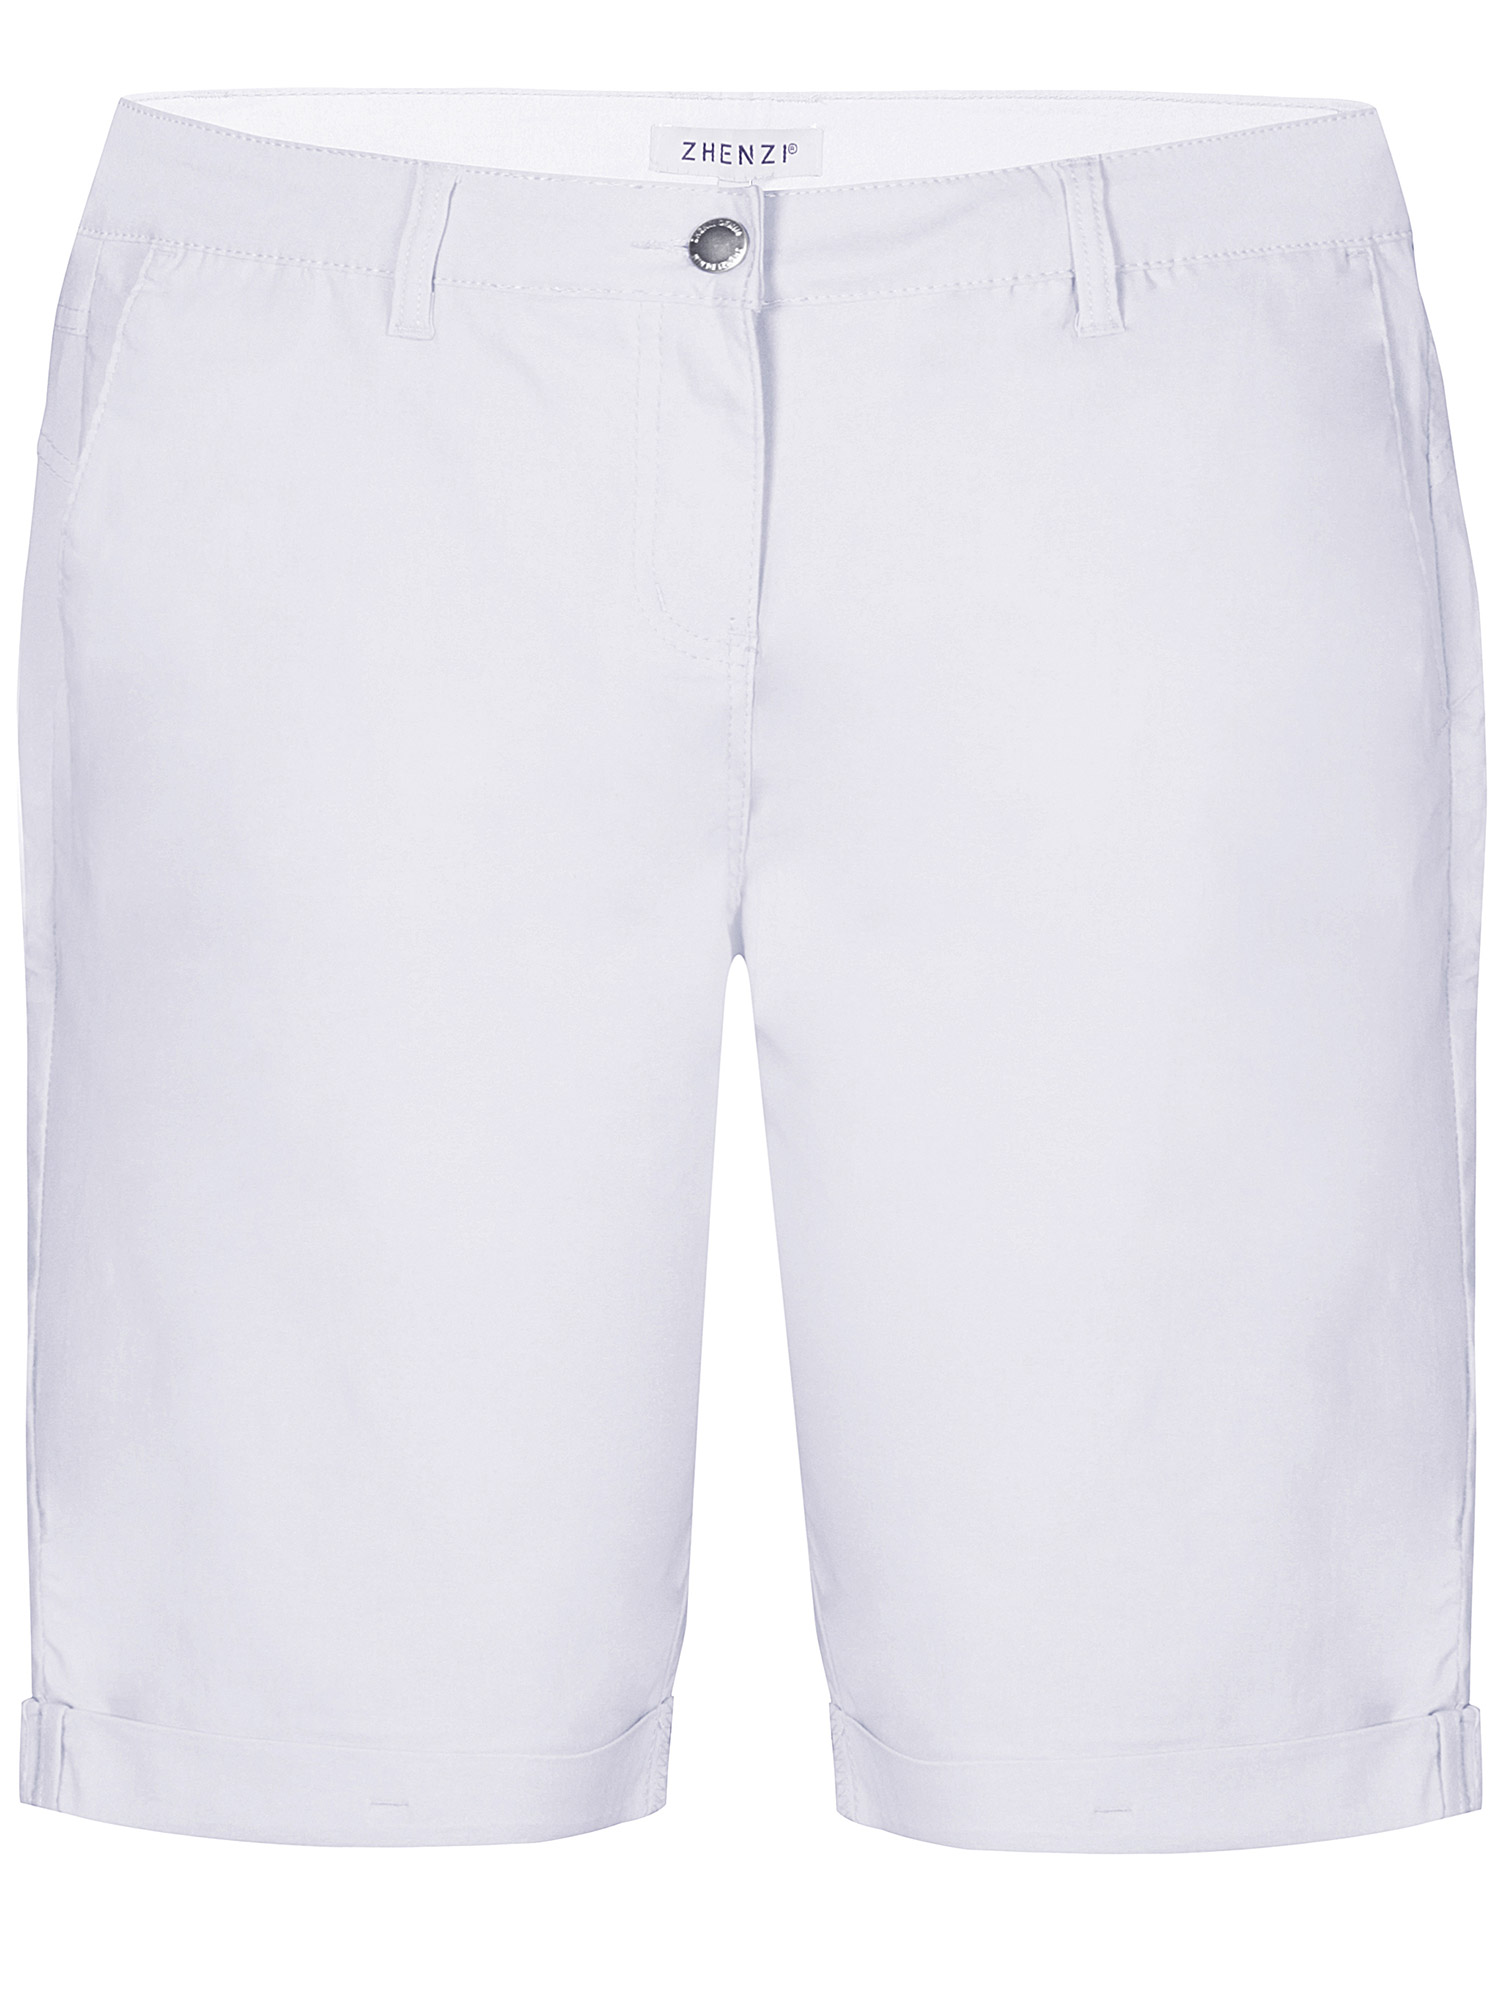 Vita shorts i bengalin kvalitet fra Zhenzi